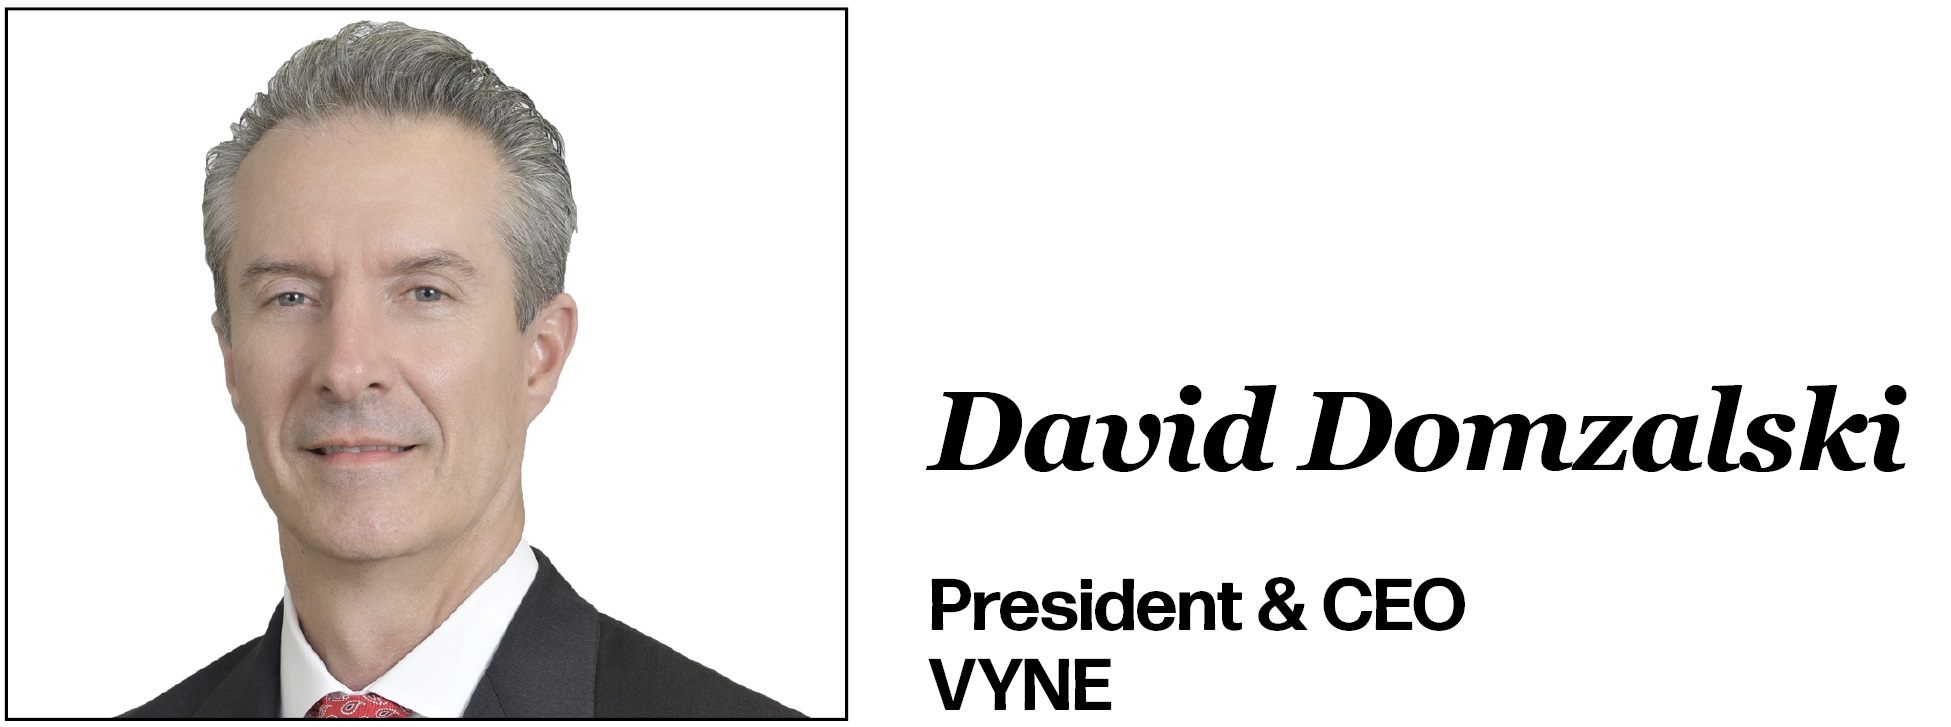 David Domzalski President & CEO VYNE